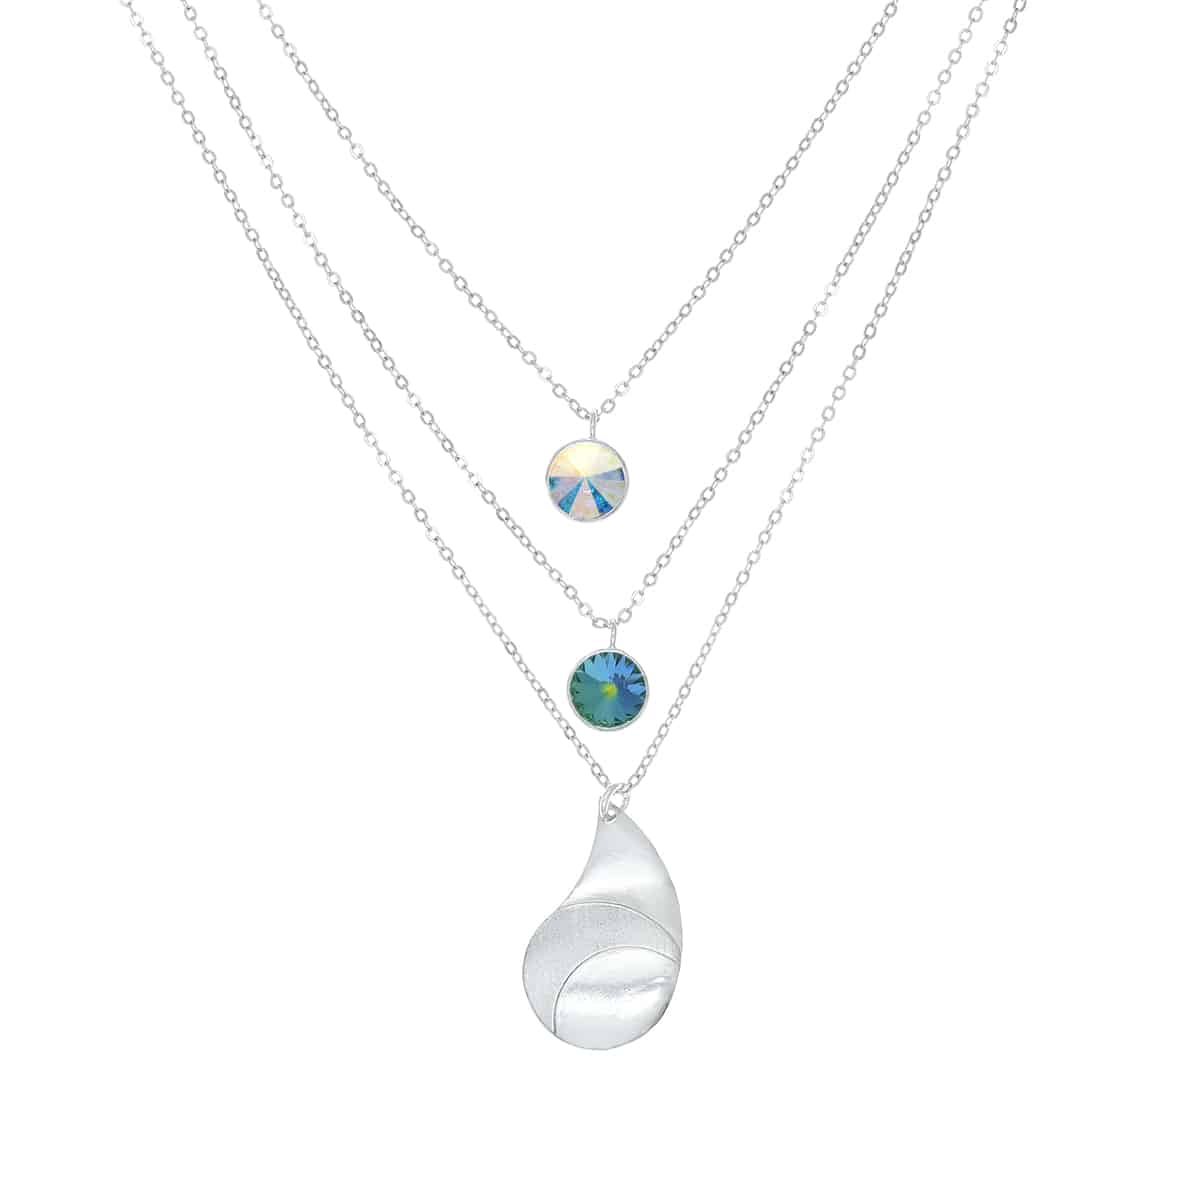 Collana-luna-cristalli-swarovski-collezione-gioielli-luminus-Stilgioie